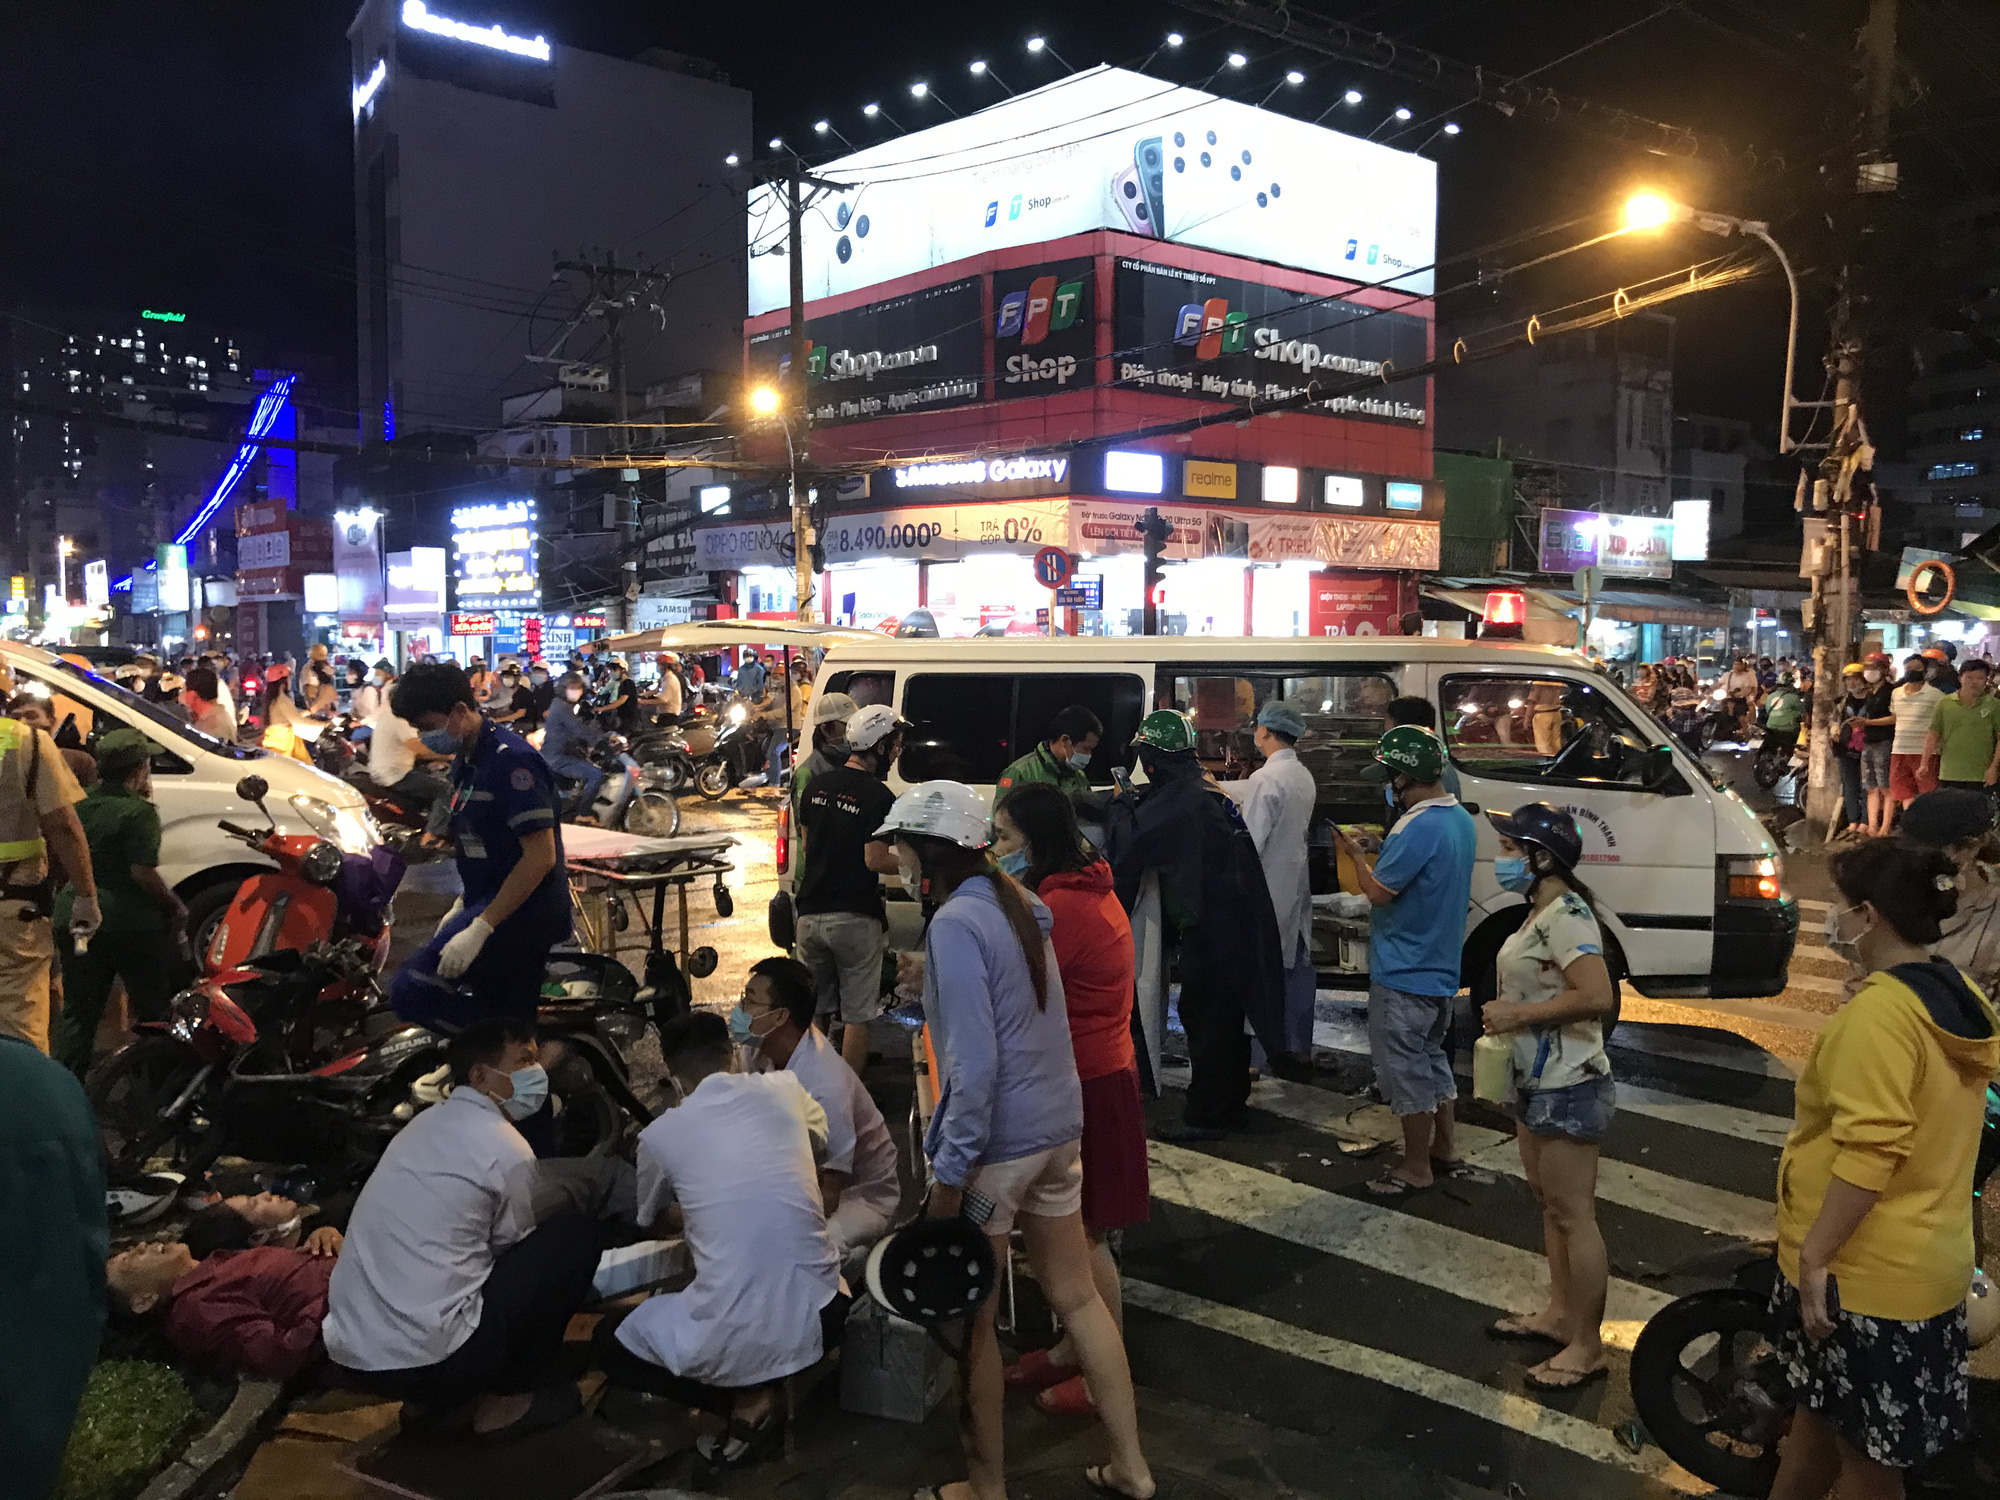 10 injured as car plows into motorbikes at red light in Saigon